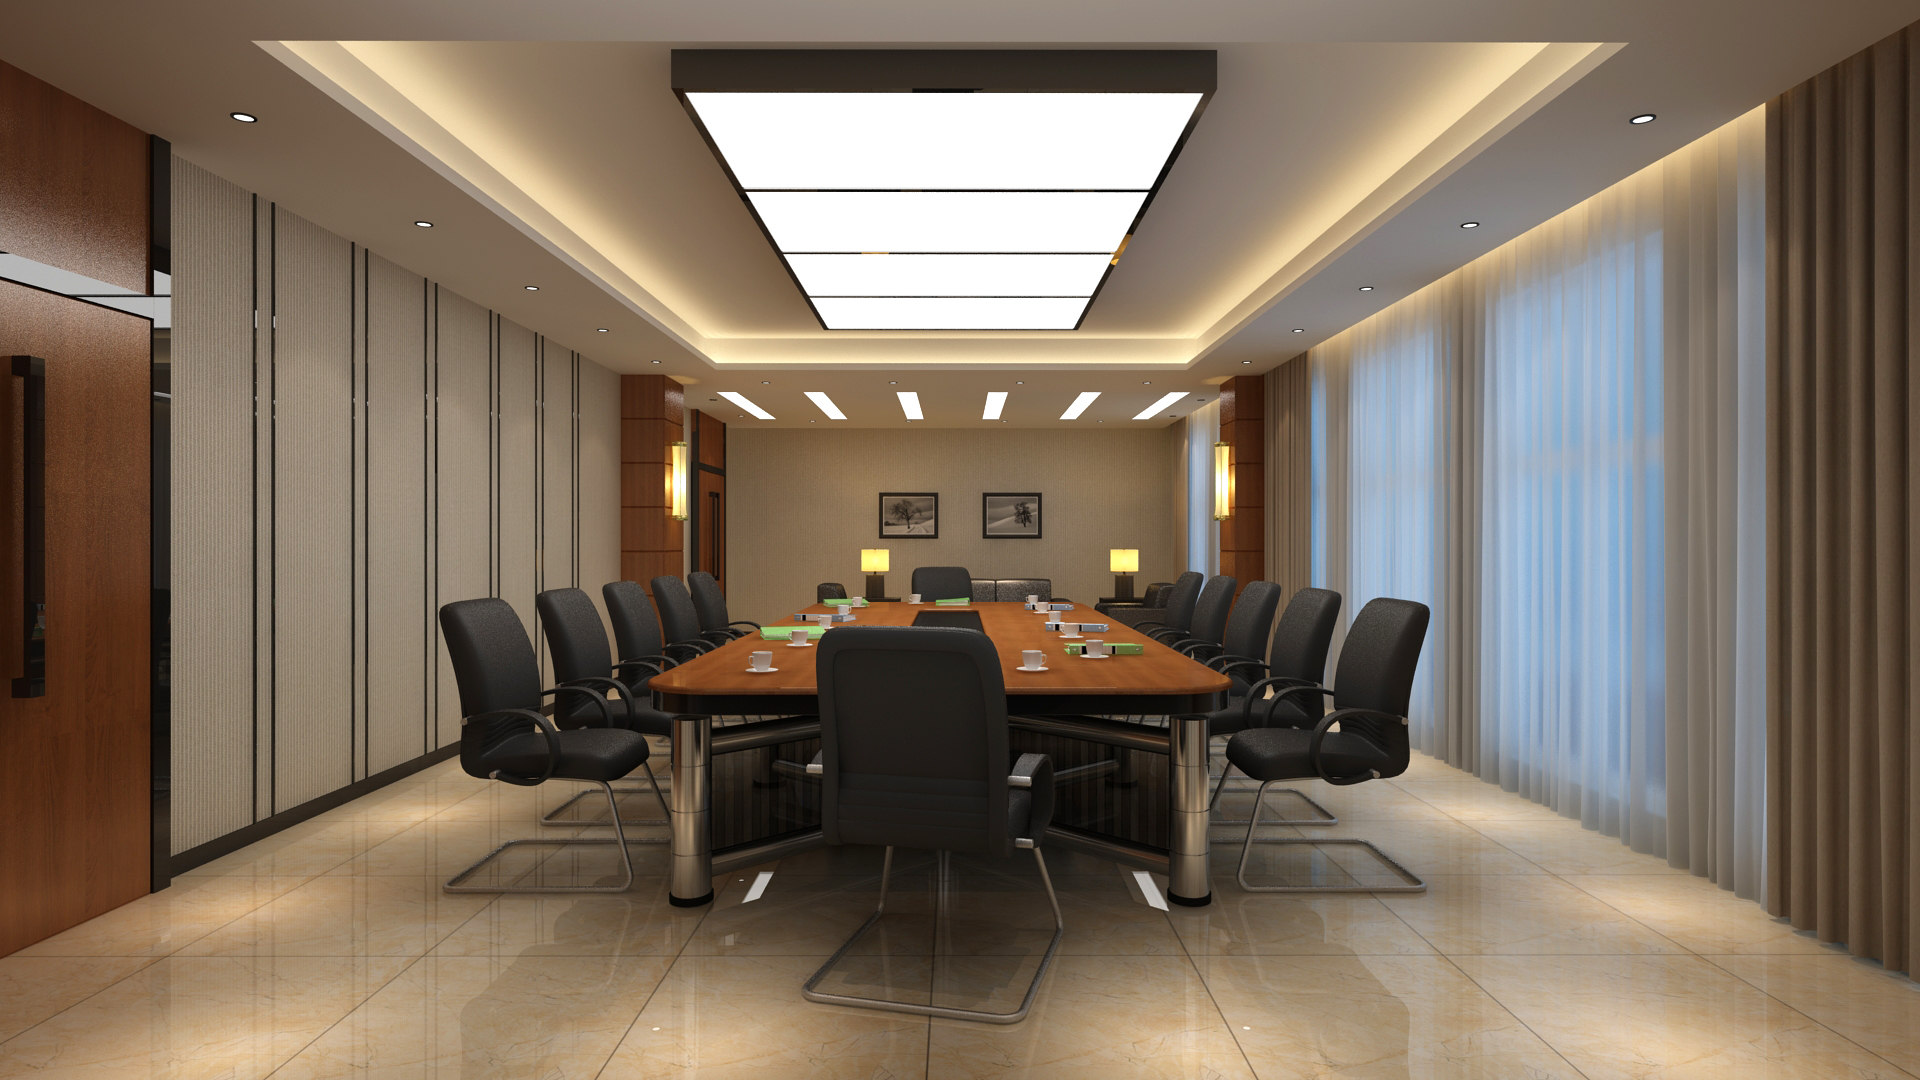 Conference room 3D model - TurboSquid 1619224